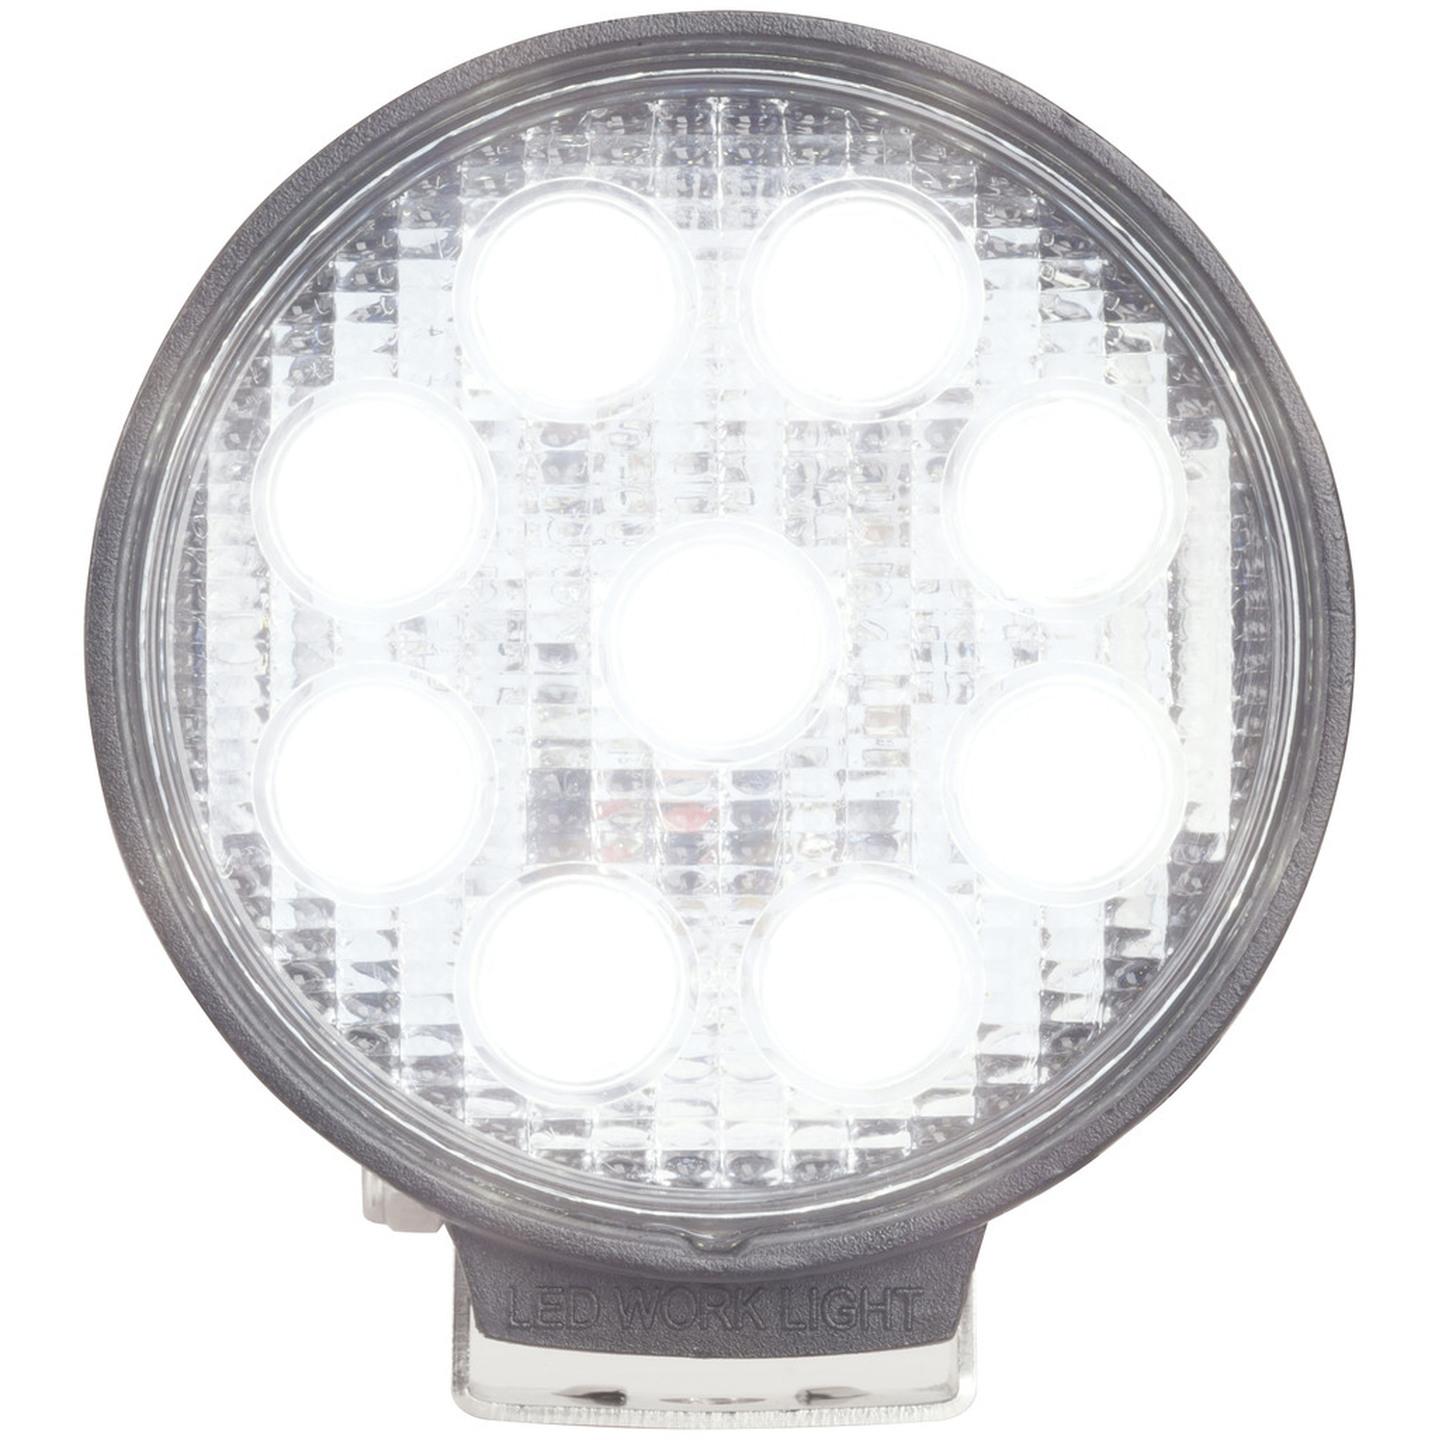 Waterproof 9 LED Spot Light Pair